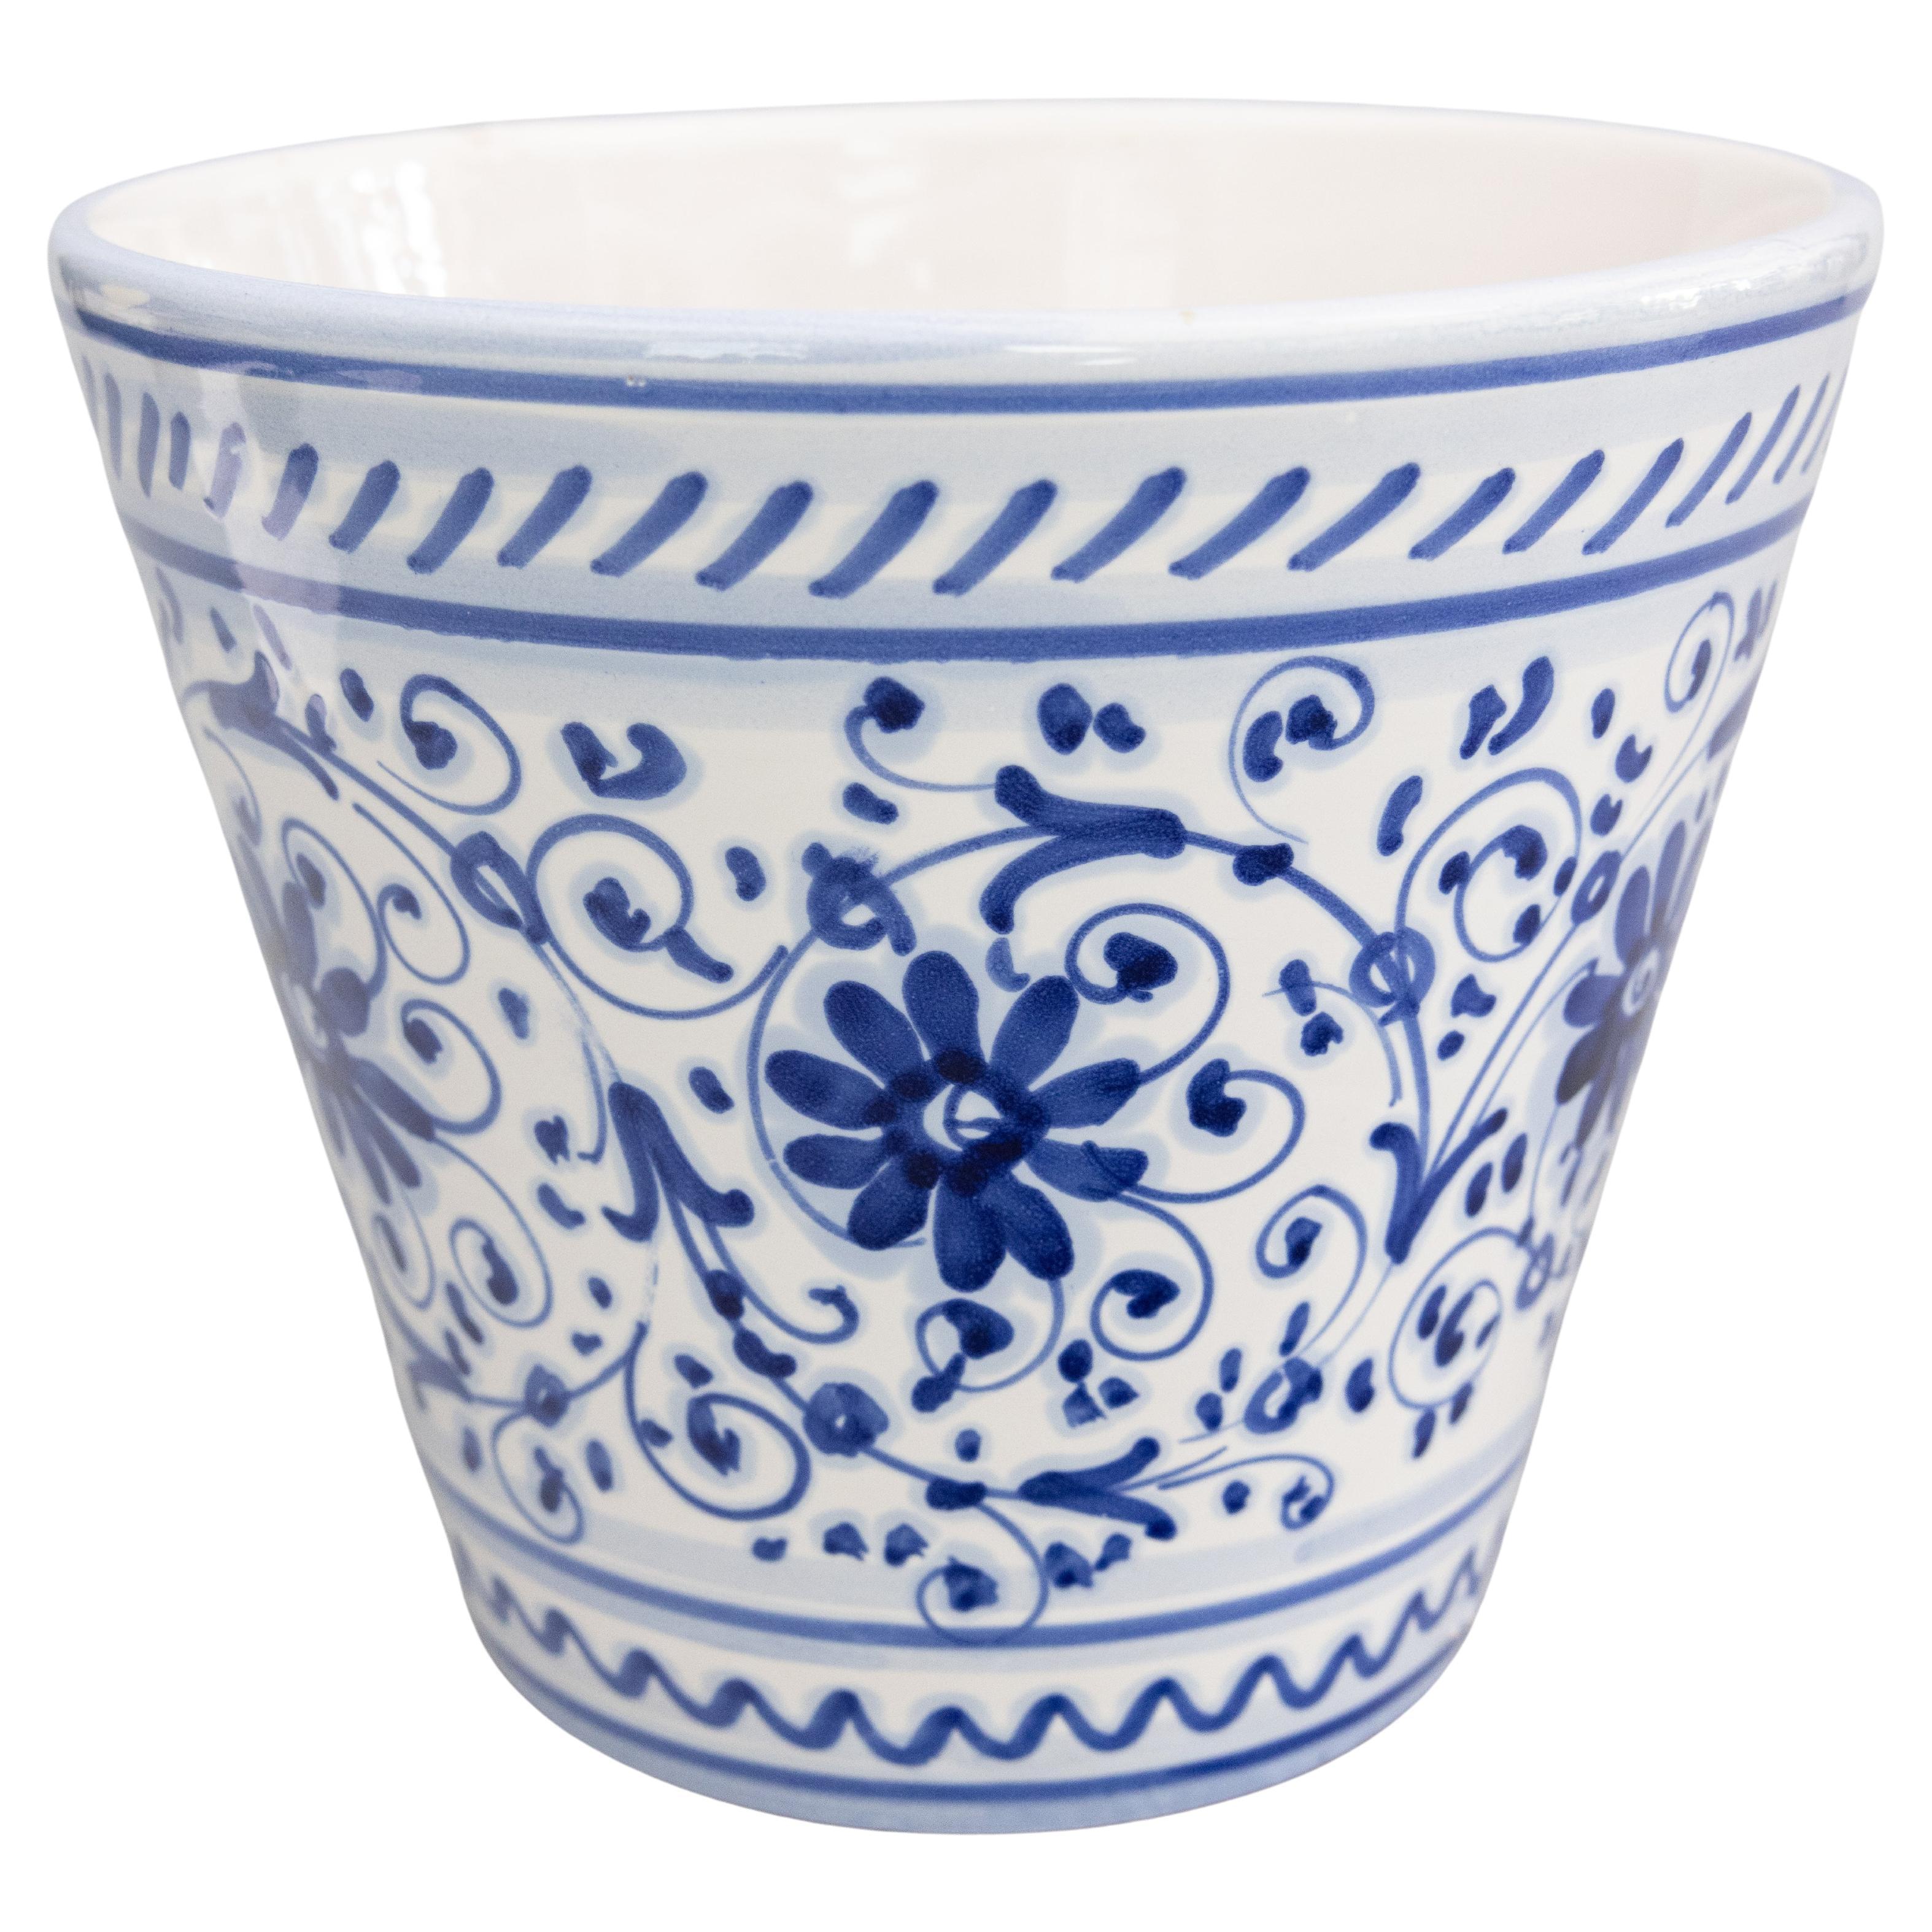 Mid-20th Century Italian Blue & White Floral Ceramic Planter Jardiniere Cachepot